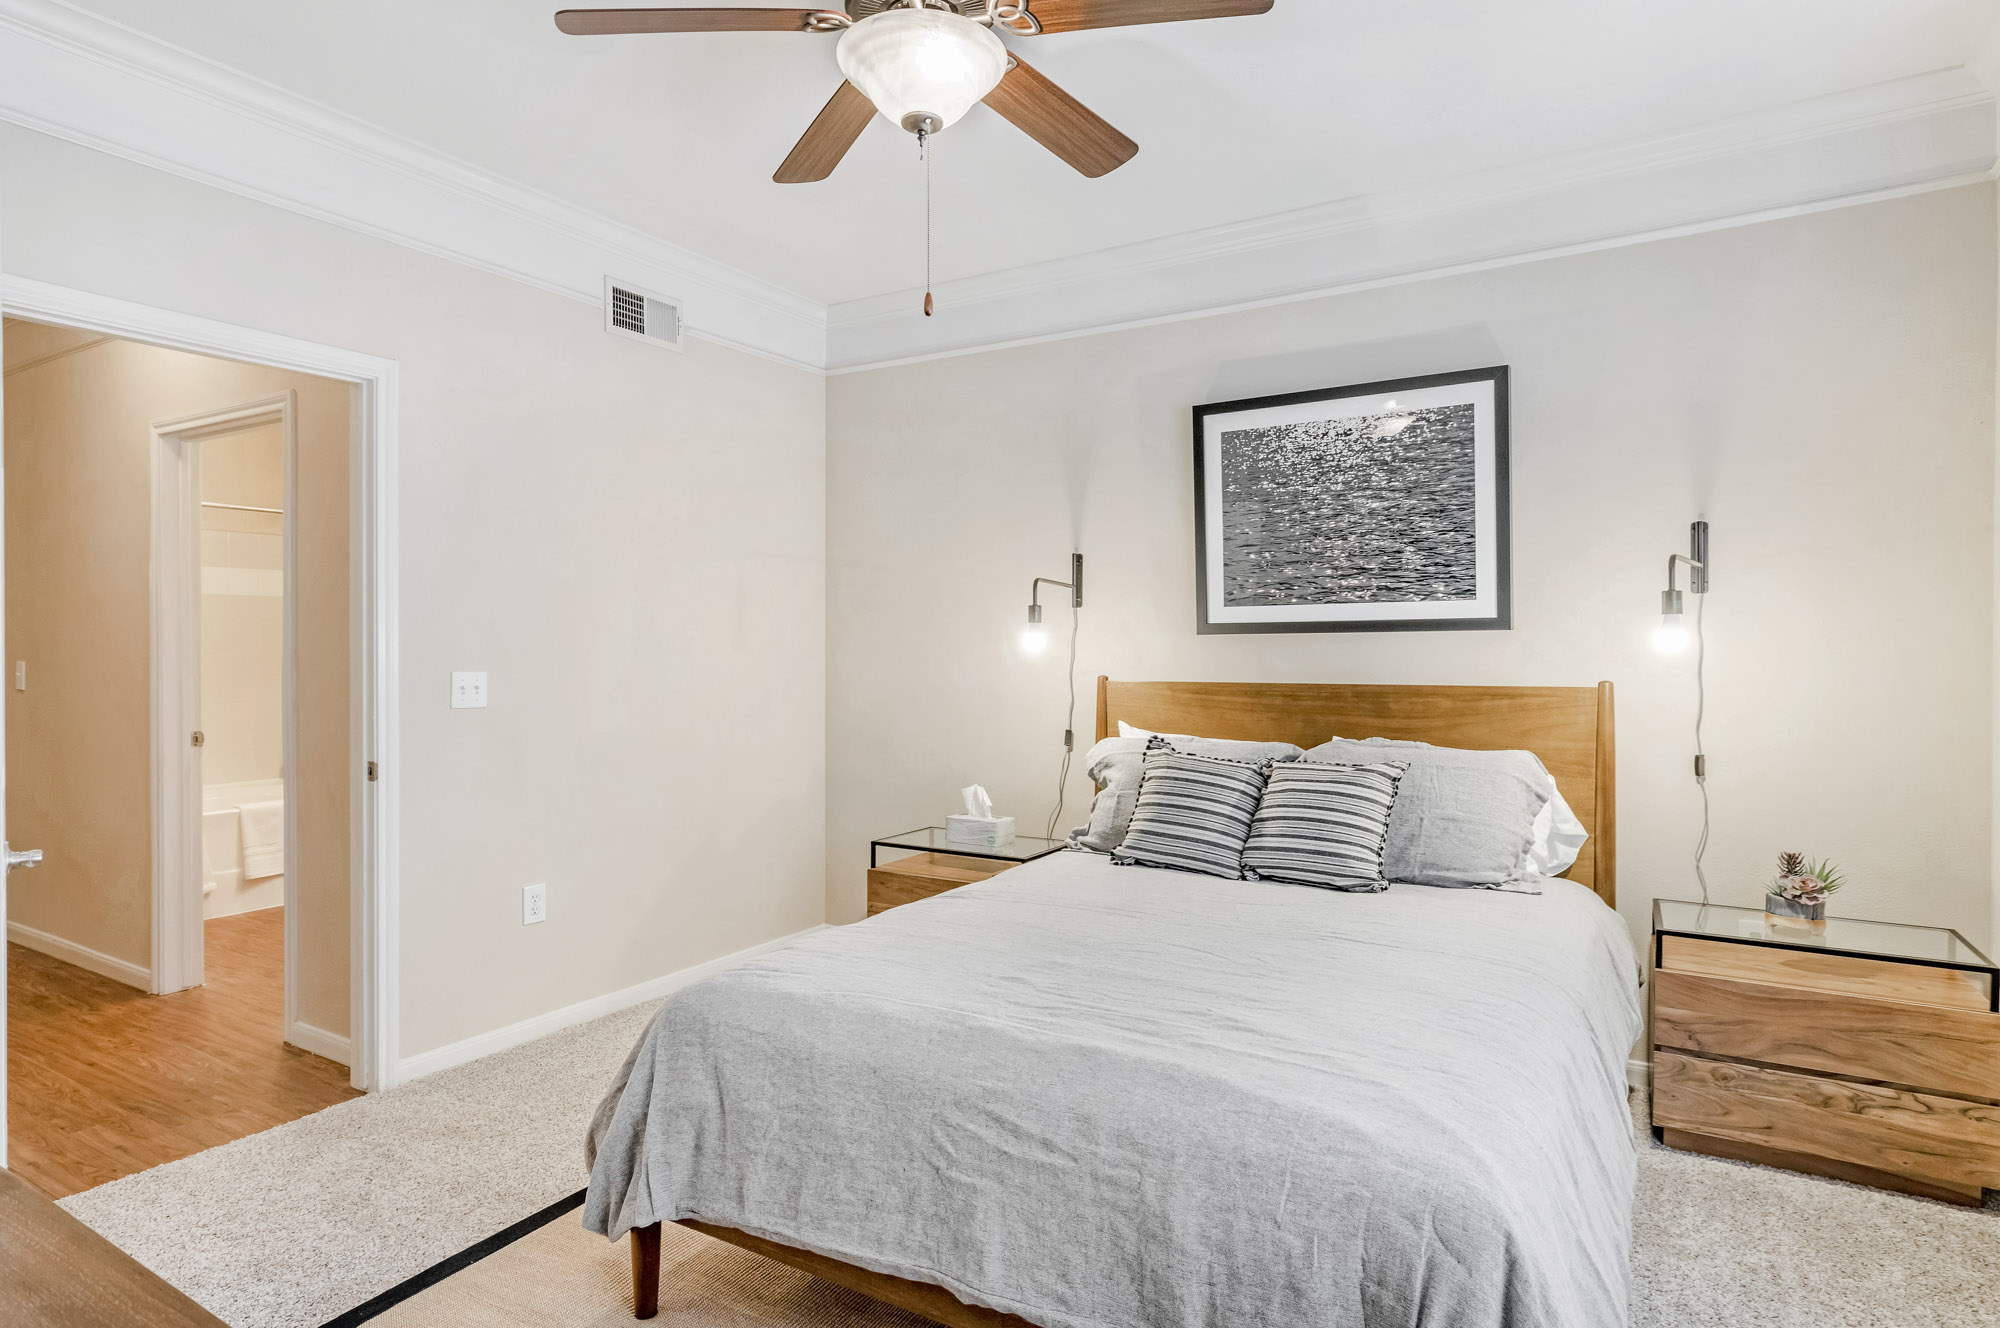 A bedroom at The Villas at Shadow Creek apartments in Houston, TX.